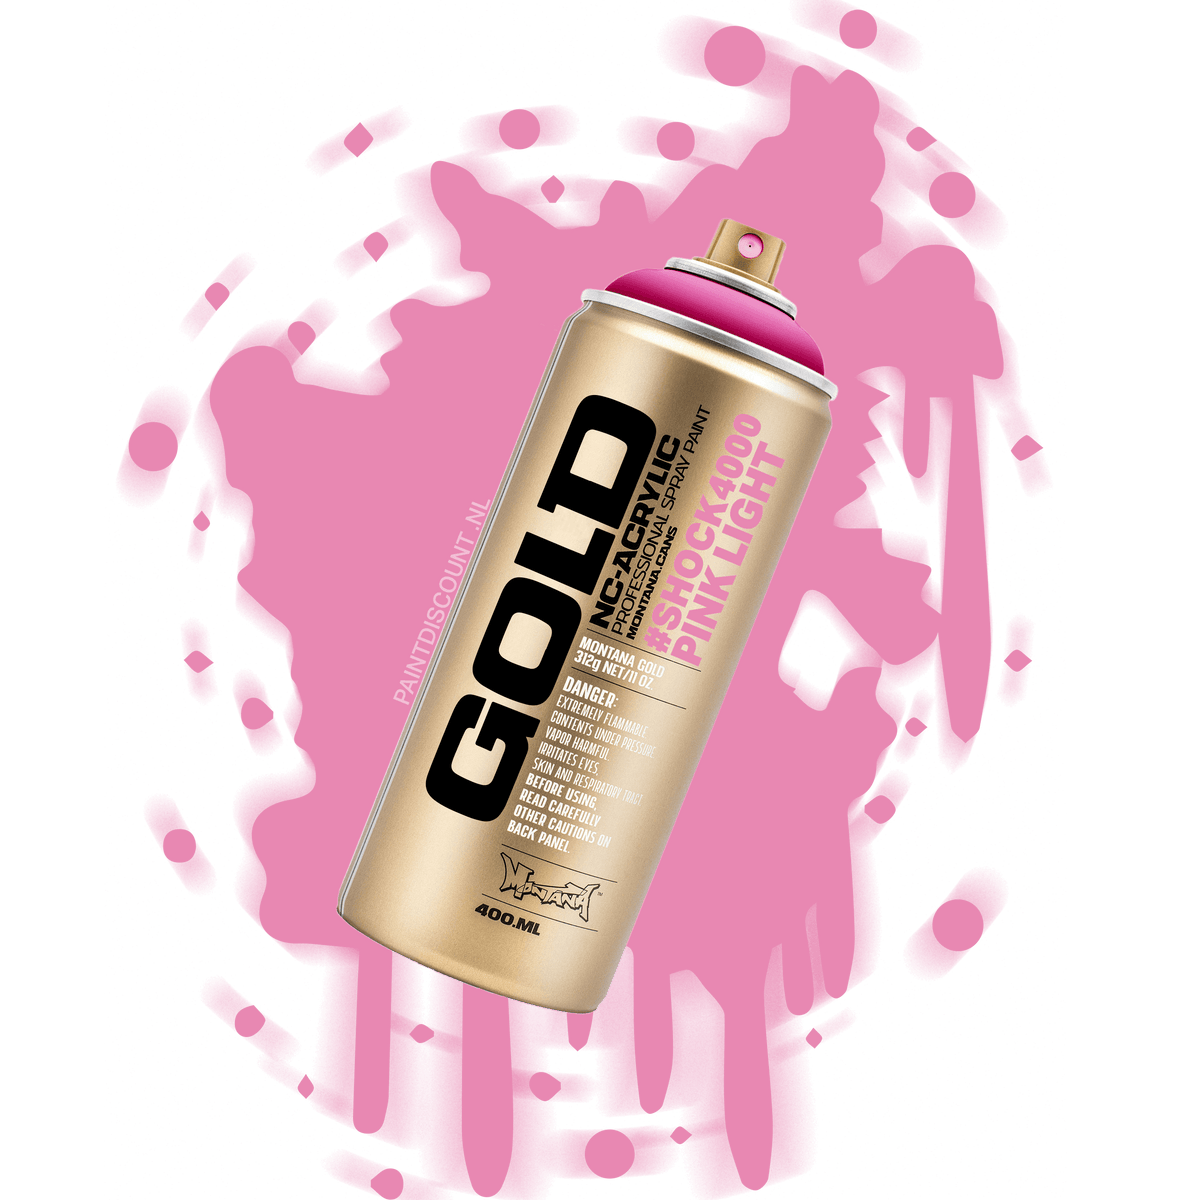 Montana GOLD Acrylic Spray Paint 400ml Shock Pink Light